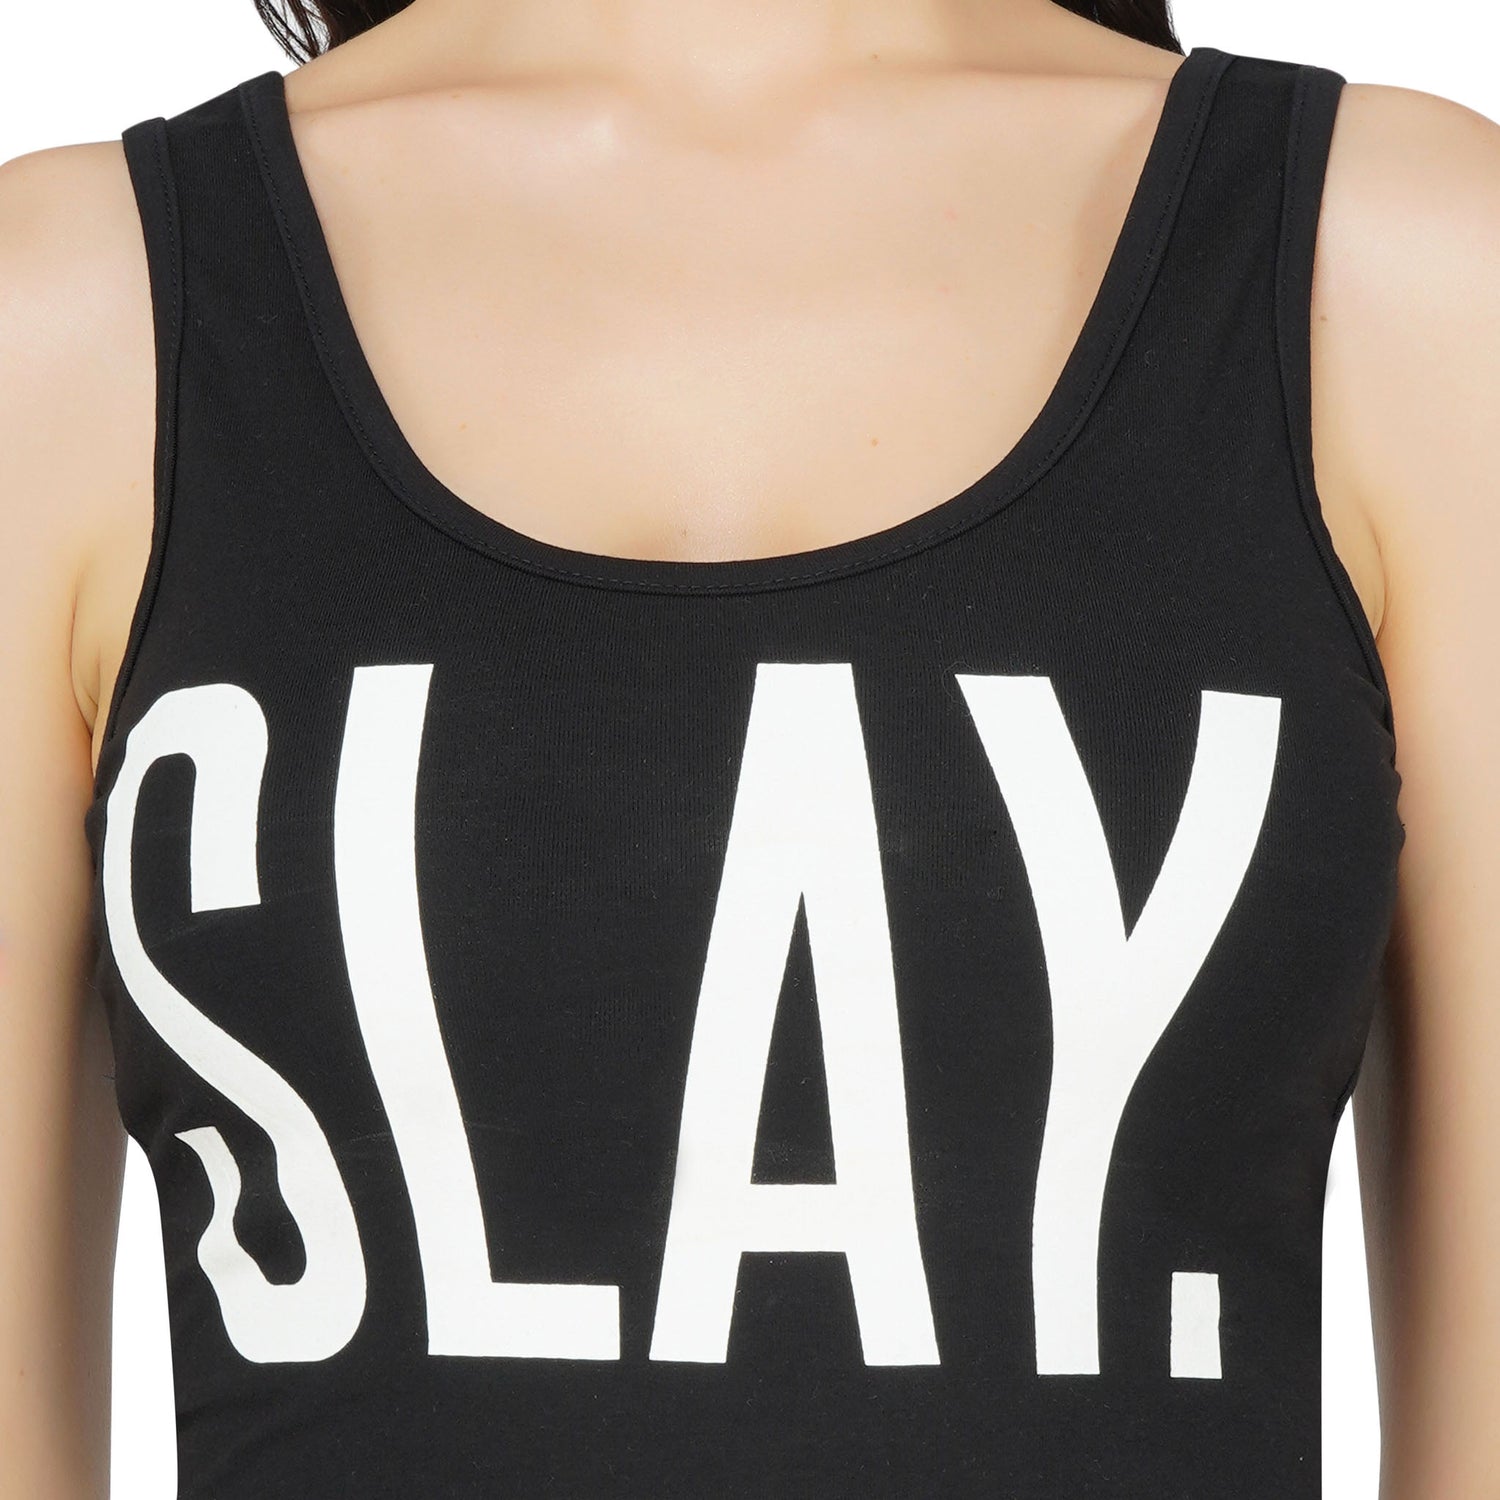 SLAY. Classic Women's Printed Black Crop Top-clothing-to-slay.myshopify.com-Crop Top